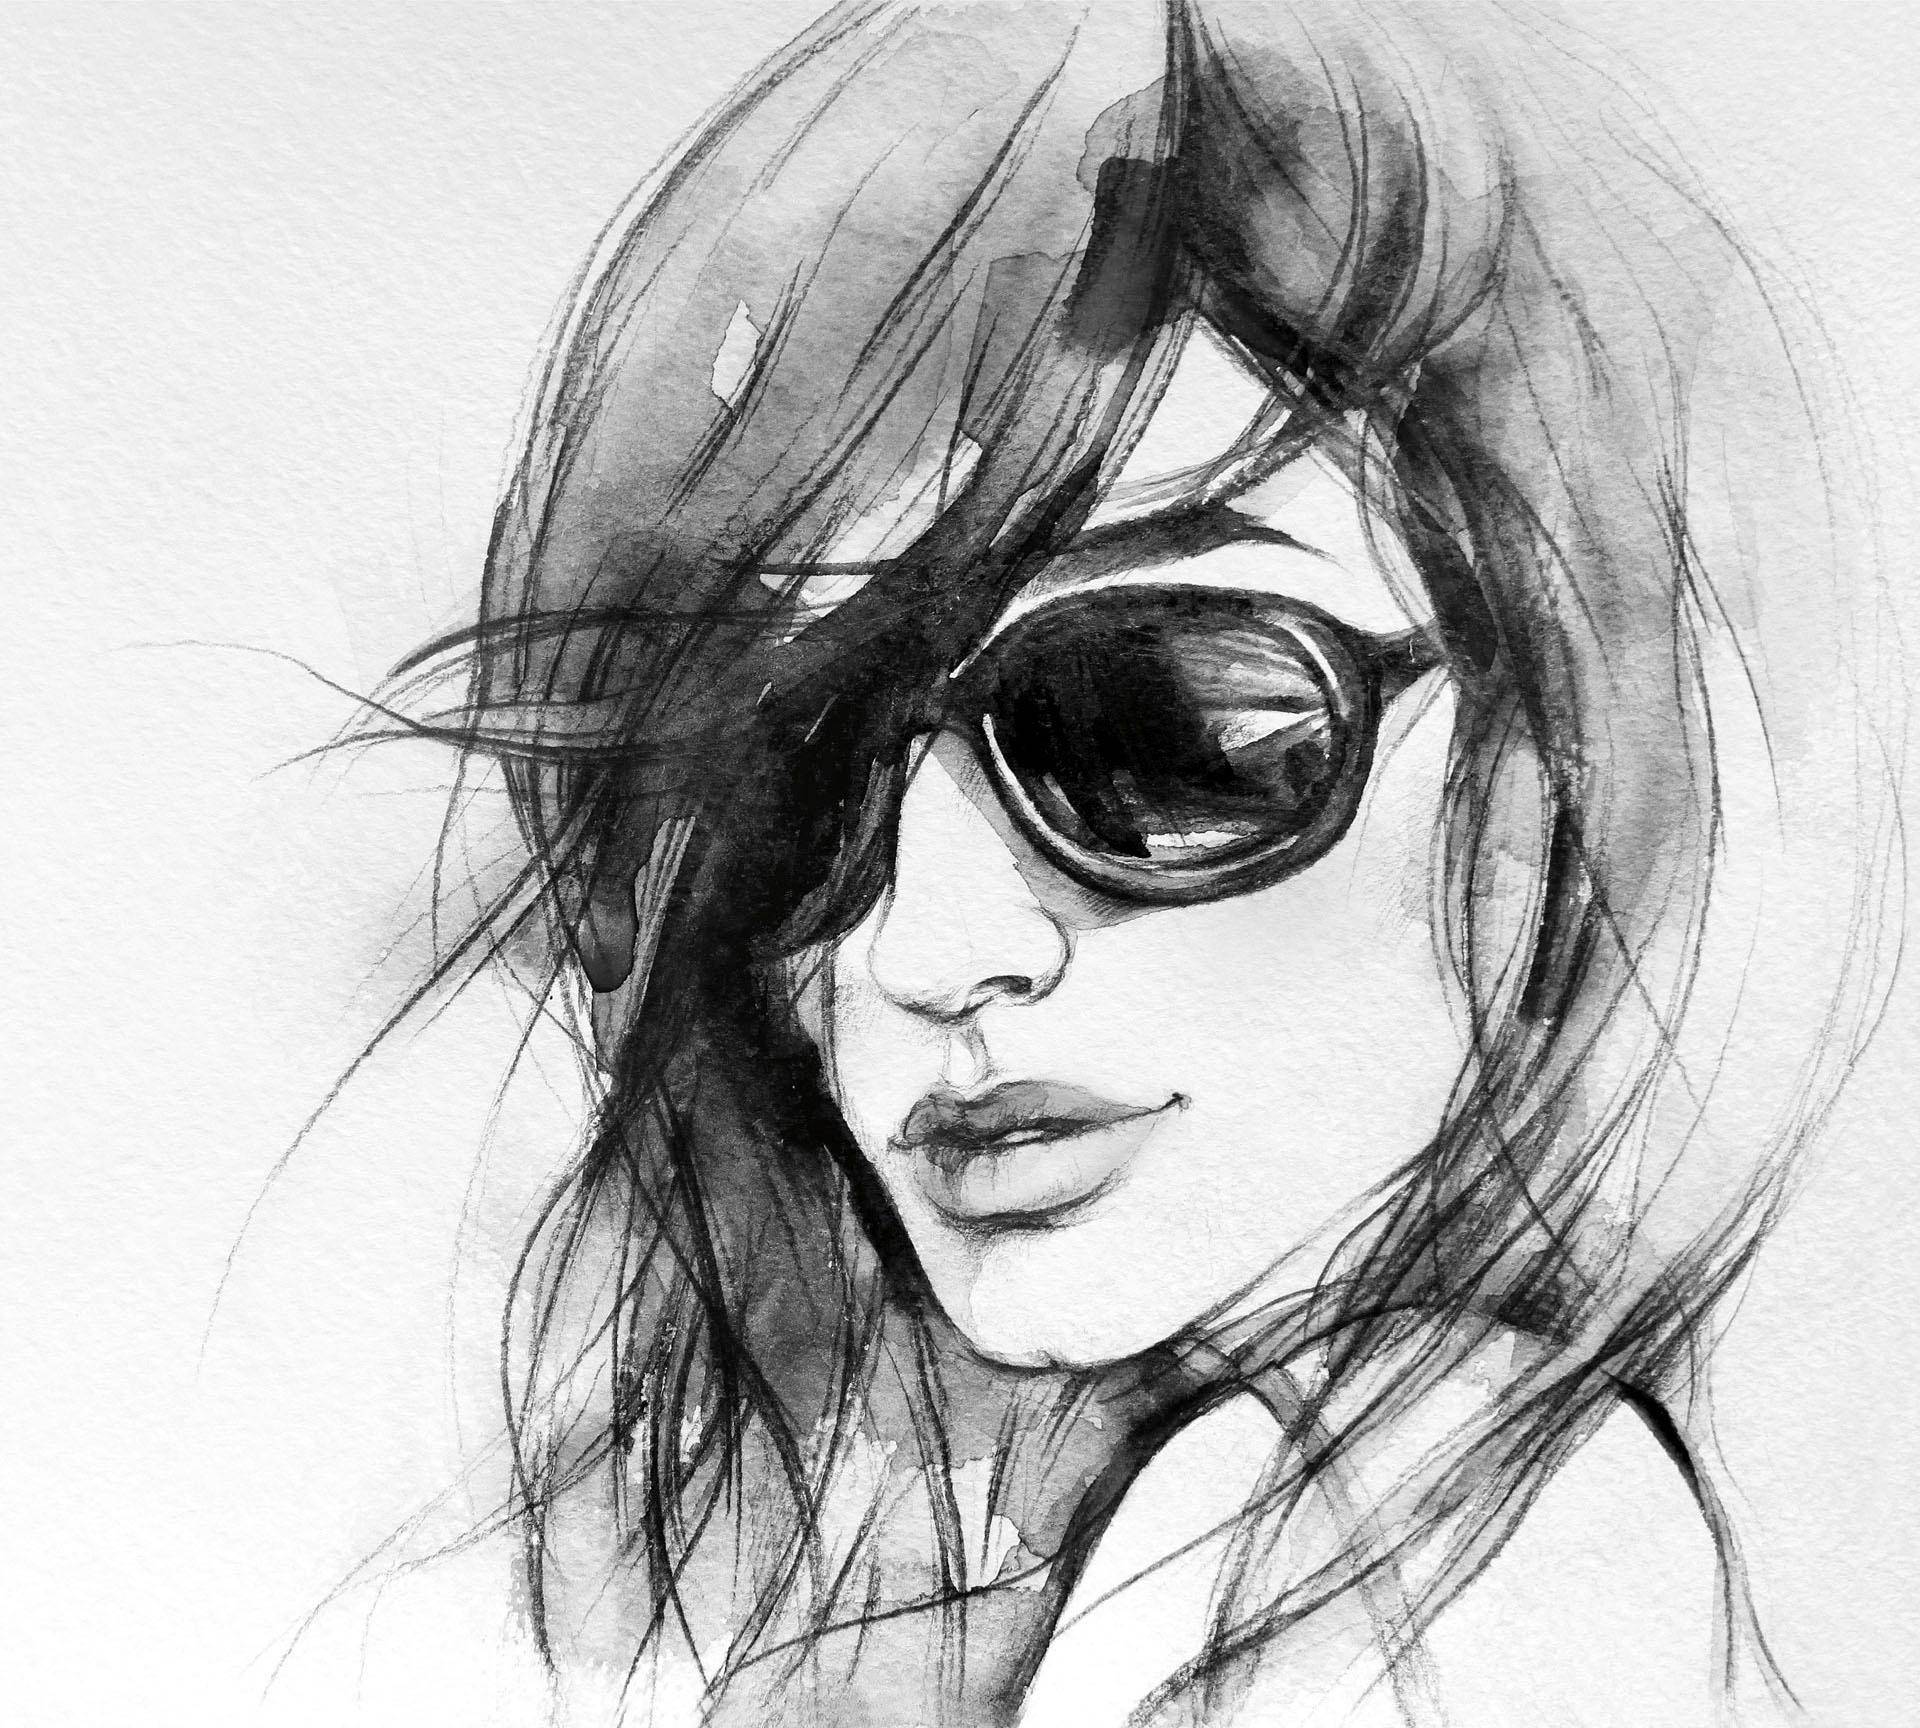 Wall-Art Vliestapete "I wear my sunglasses" von Wall-Art